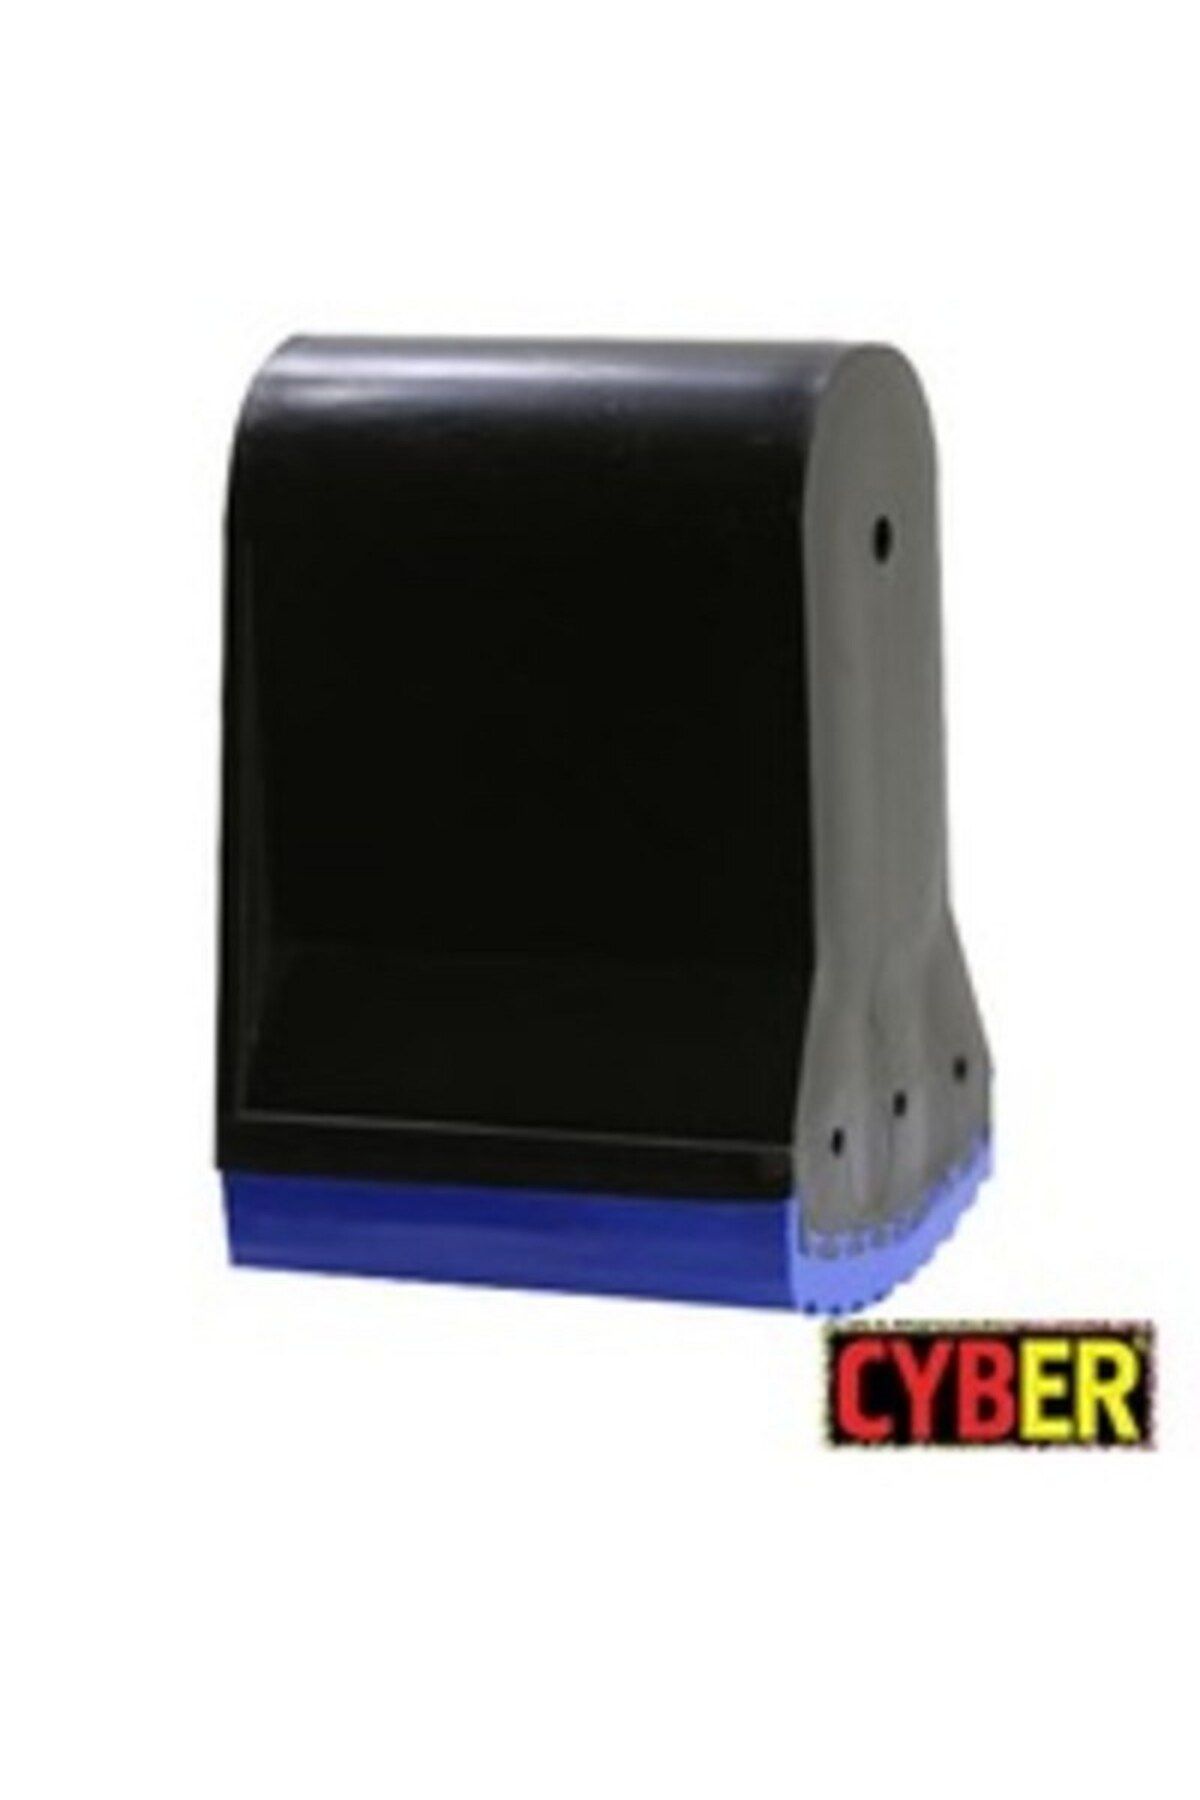 Cyber 30x60 Plastik Elips Merdiven Tapası Siyah-Mavi